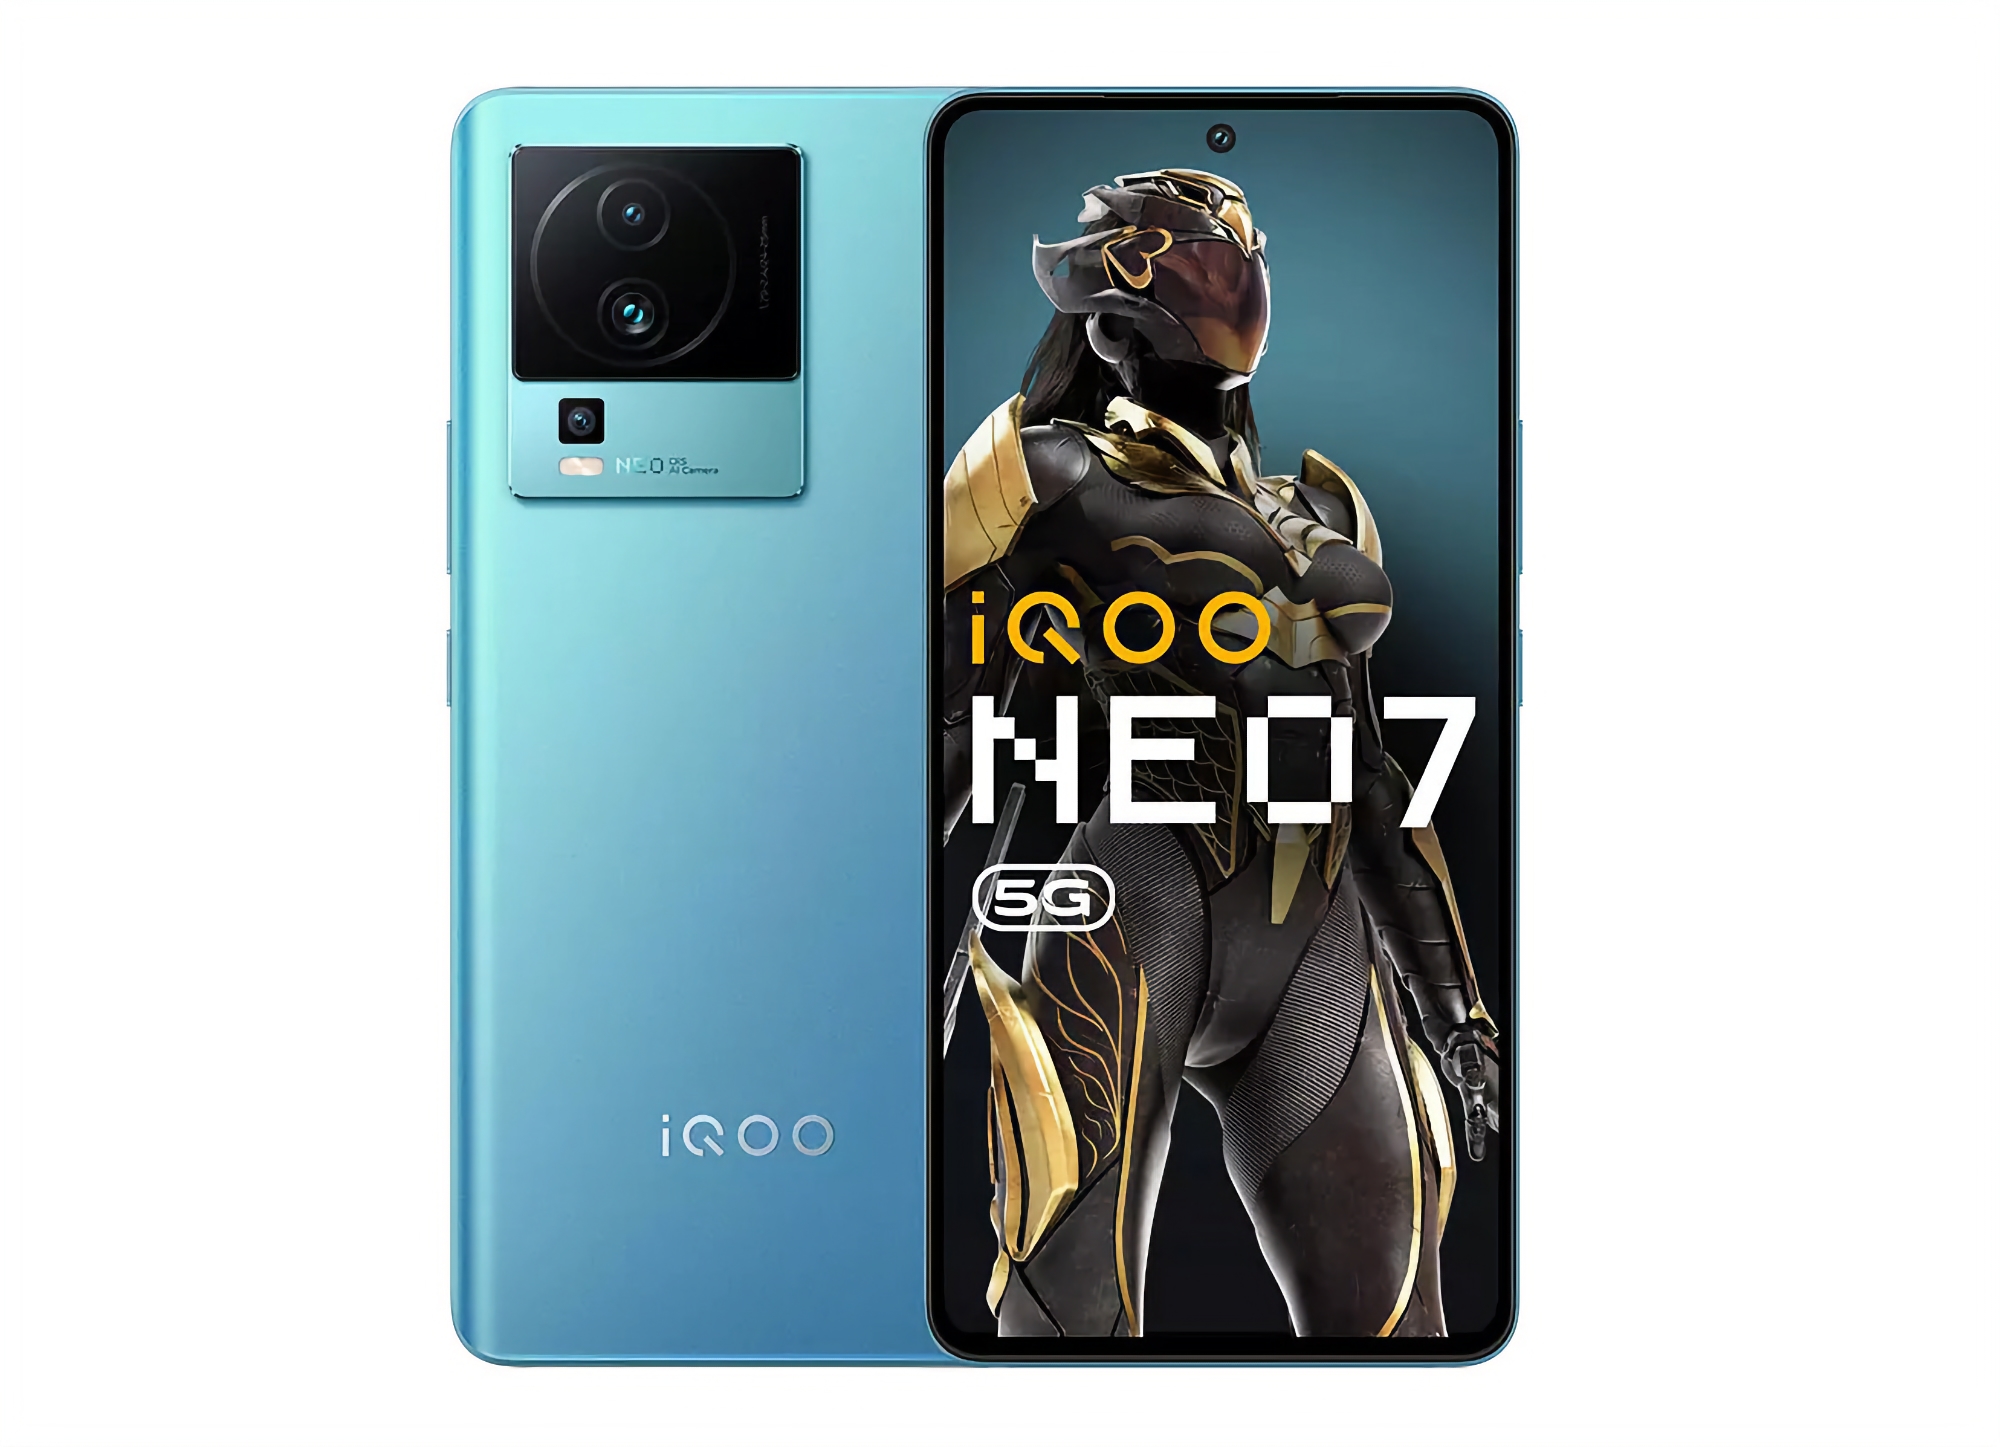 vivo представила iQOO Neo 7: OLED-екран на 120 Гц, чип MediaTek Dimensity 8200 і зарядка на 120 Вт за $362